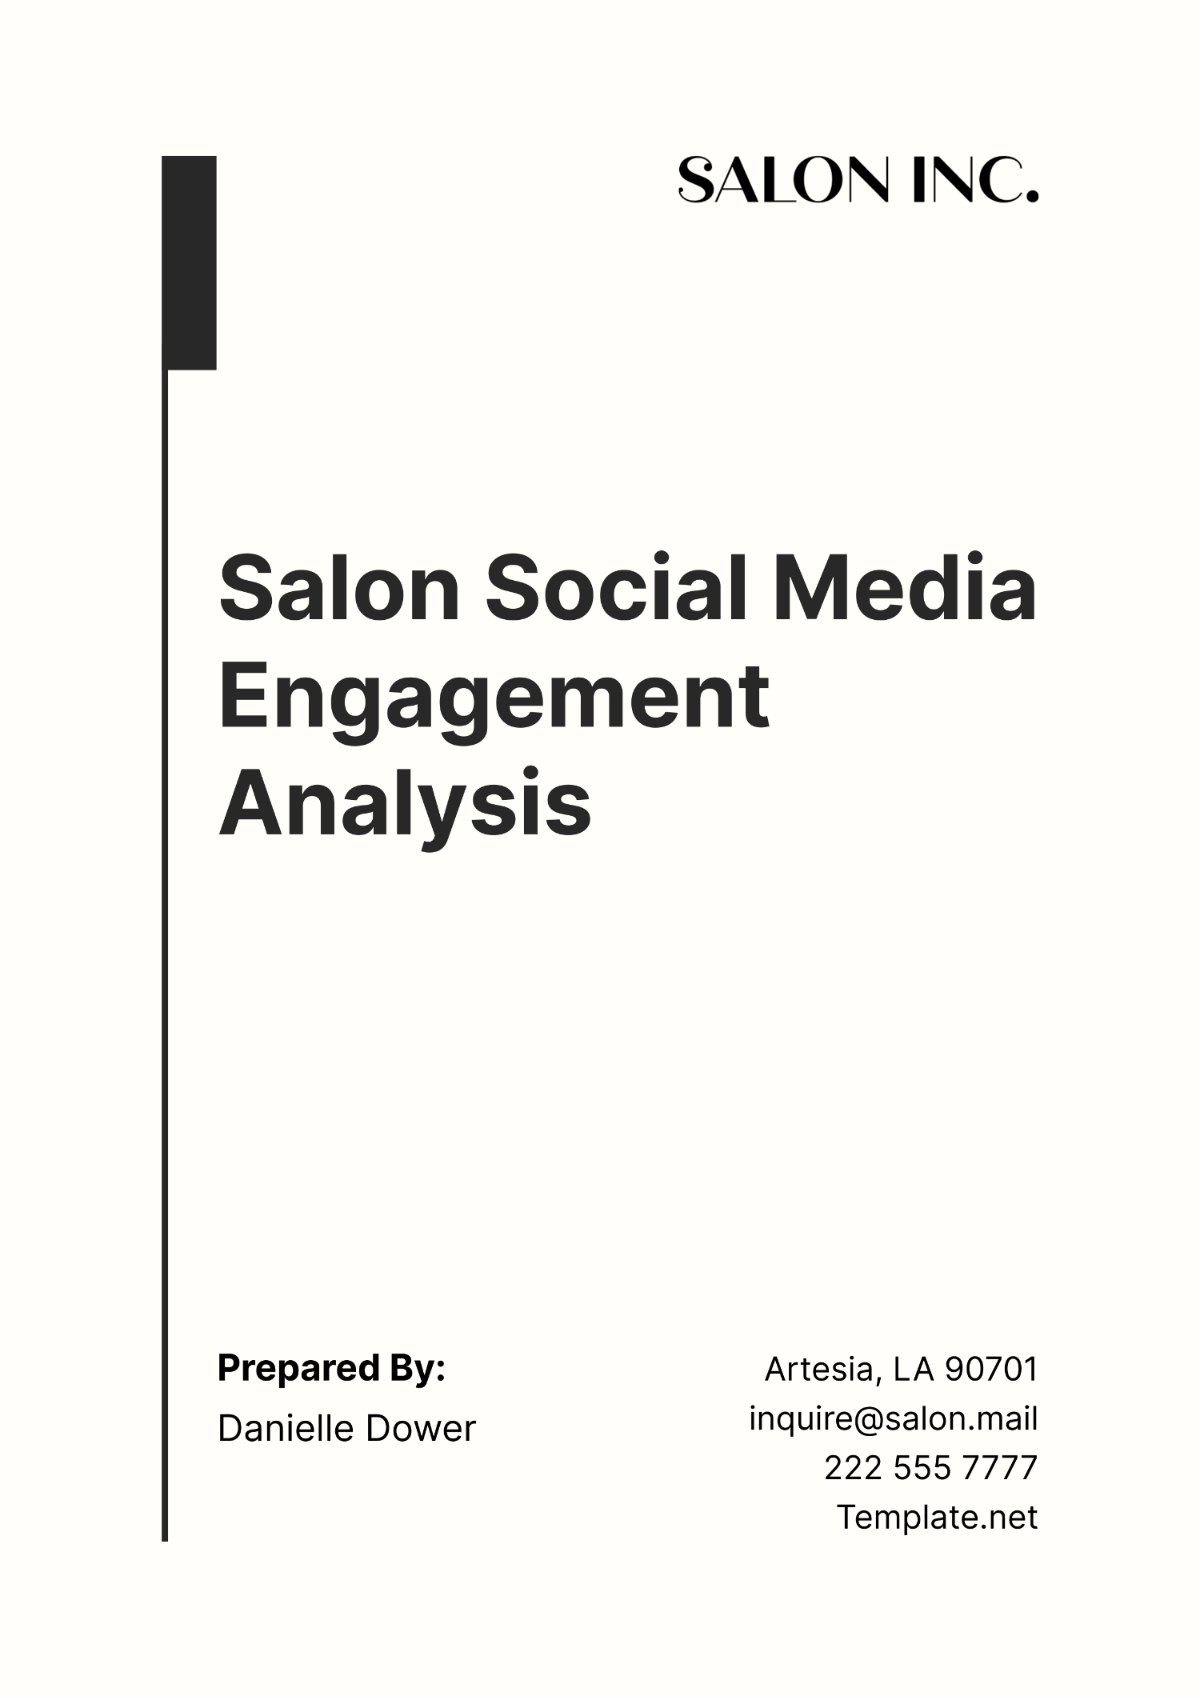 Salon Social Media Engagement Analysis Template